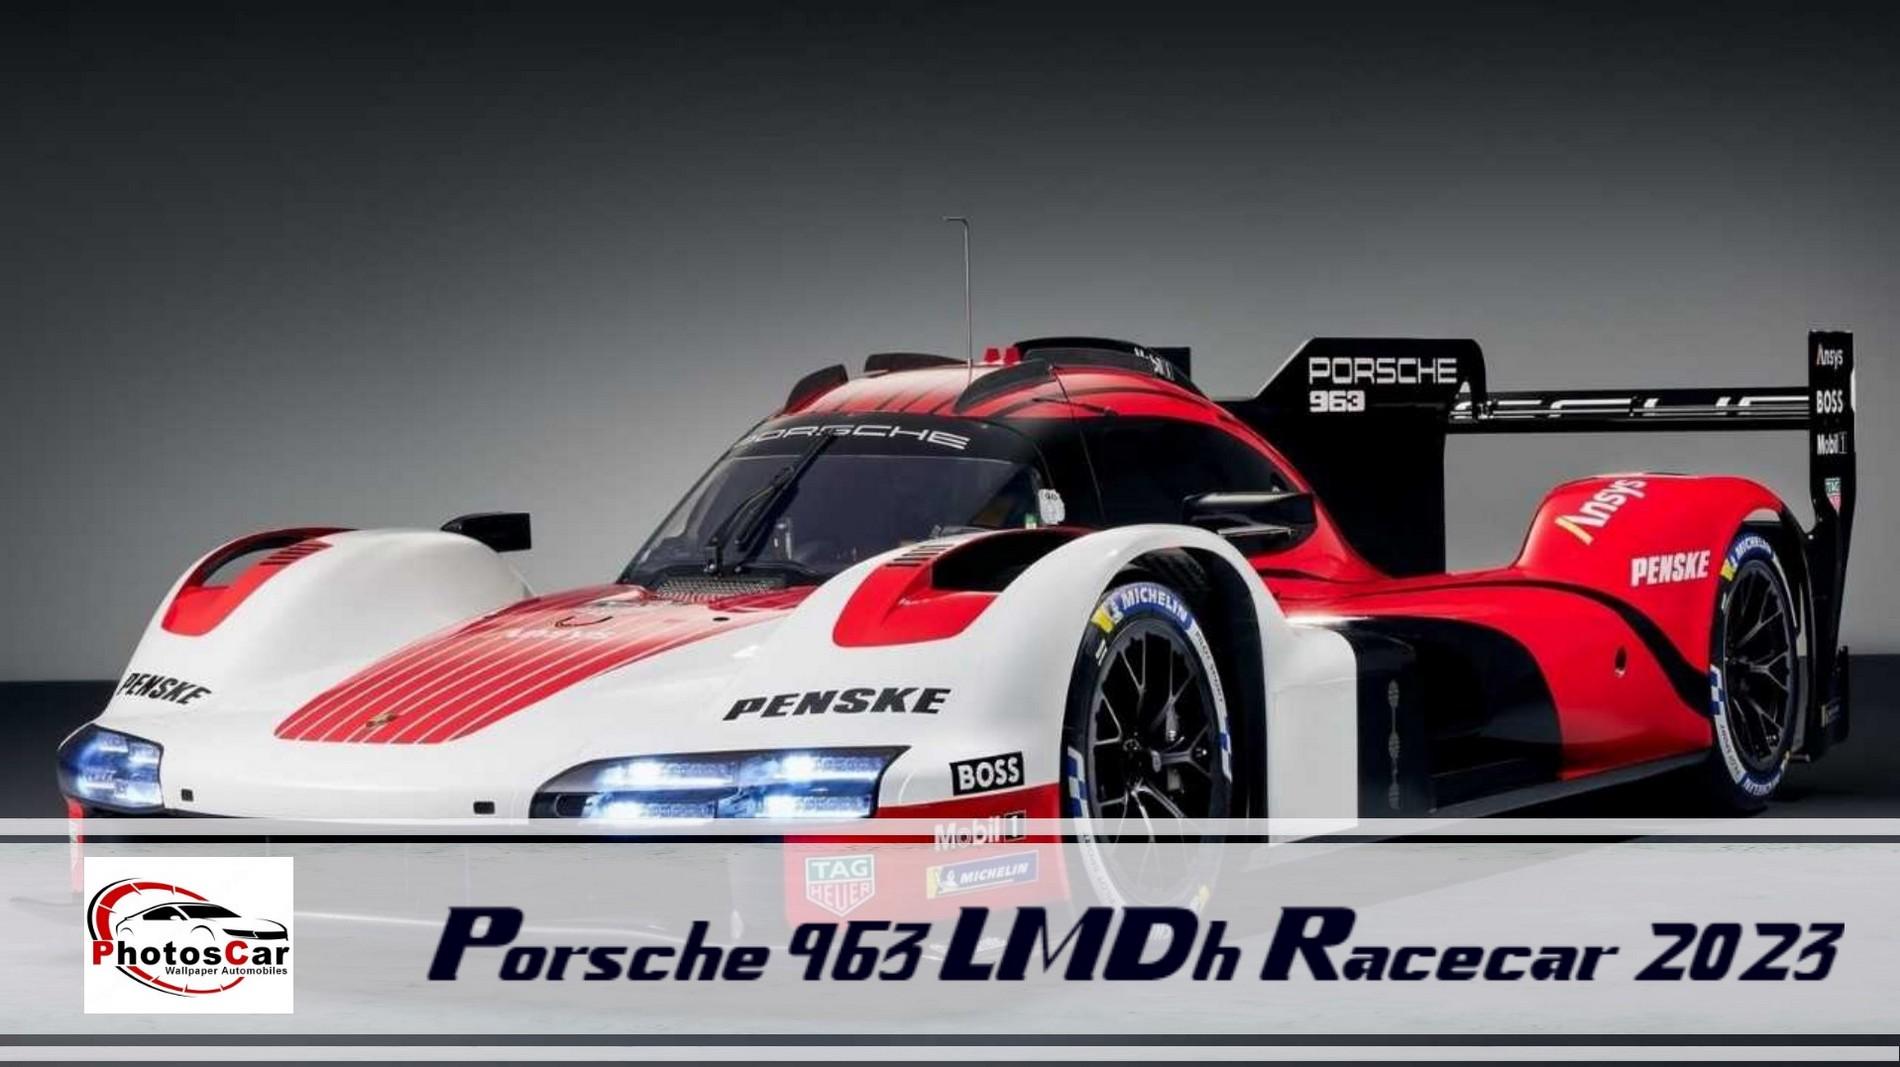 Porsche 963 LMDh Racecar 2023